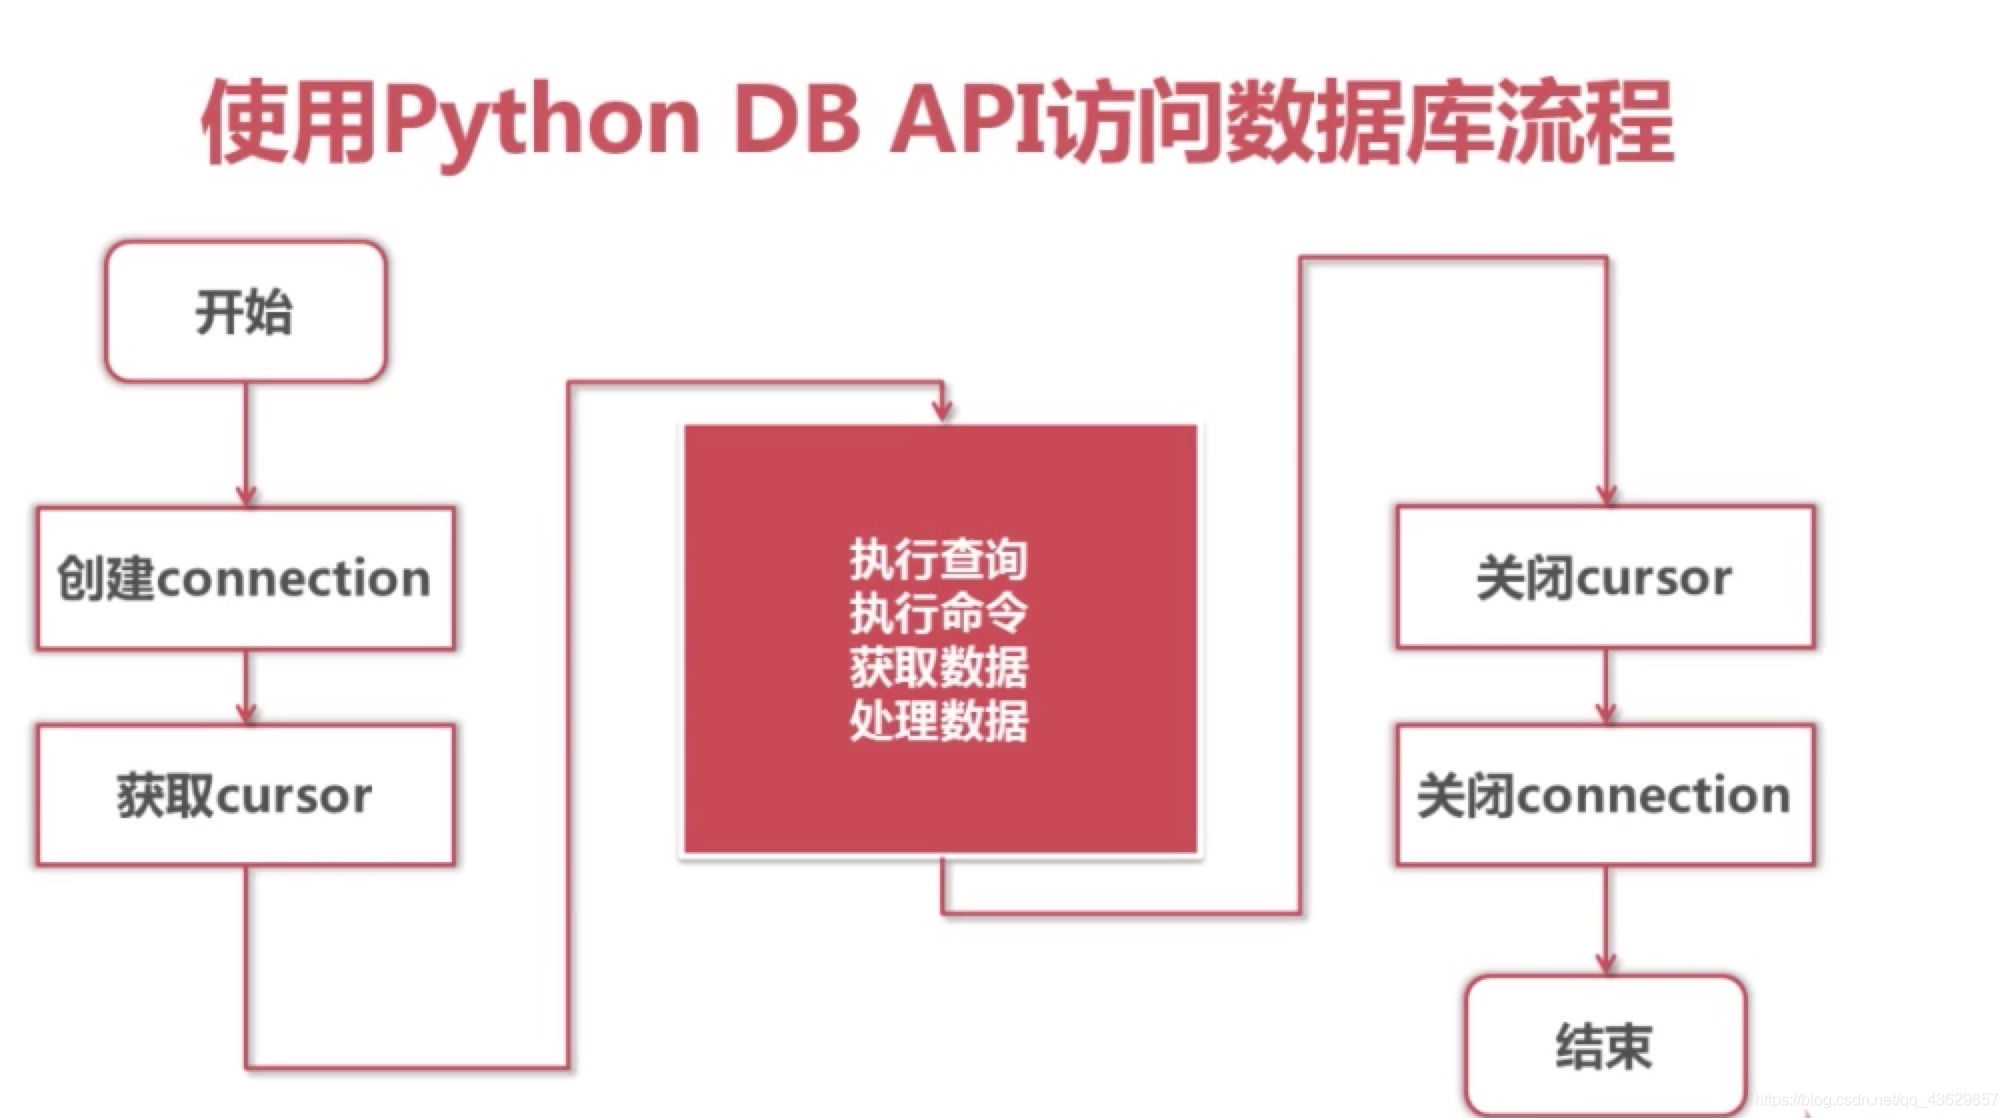 Python DB API访问数据库流程